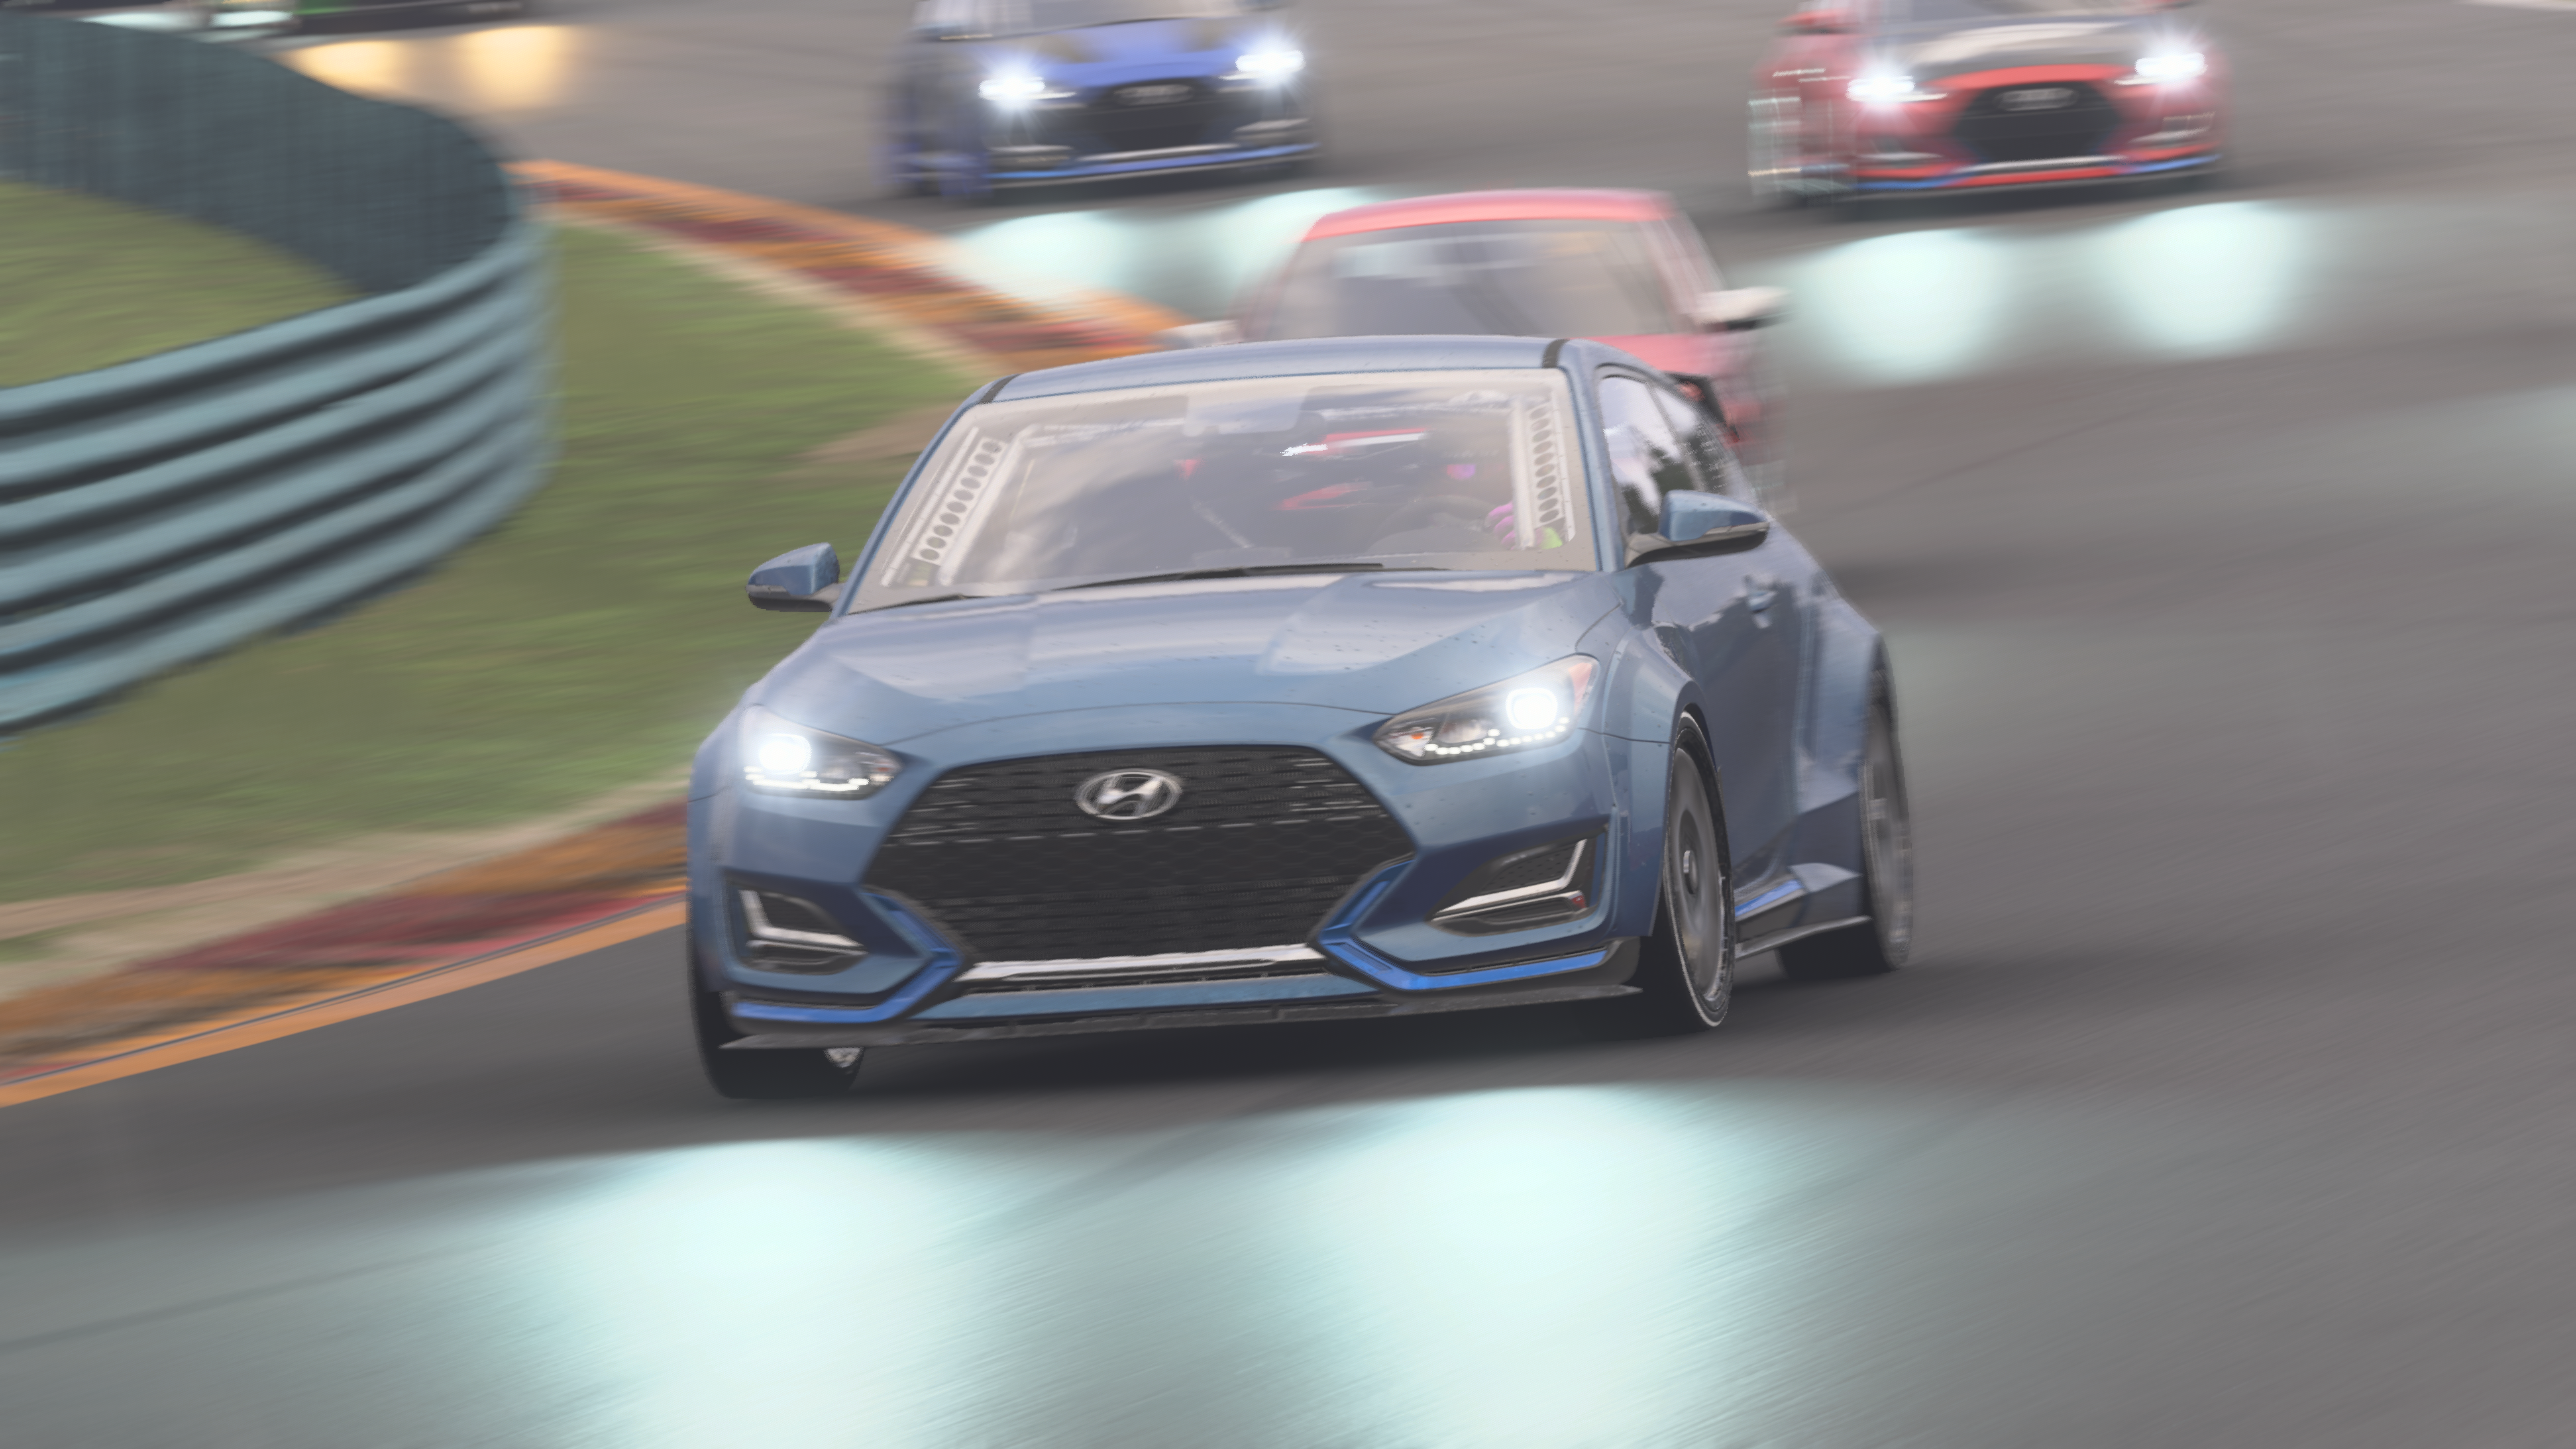 Forza Motorsport 7 reviewed: Racing fun for everyone